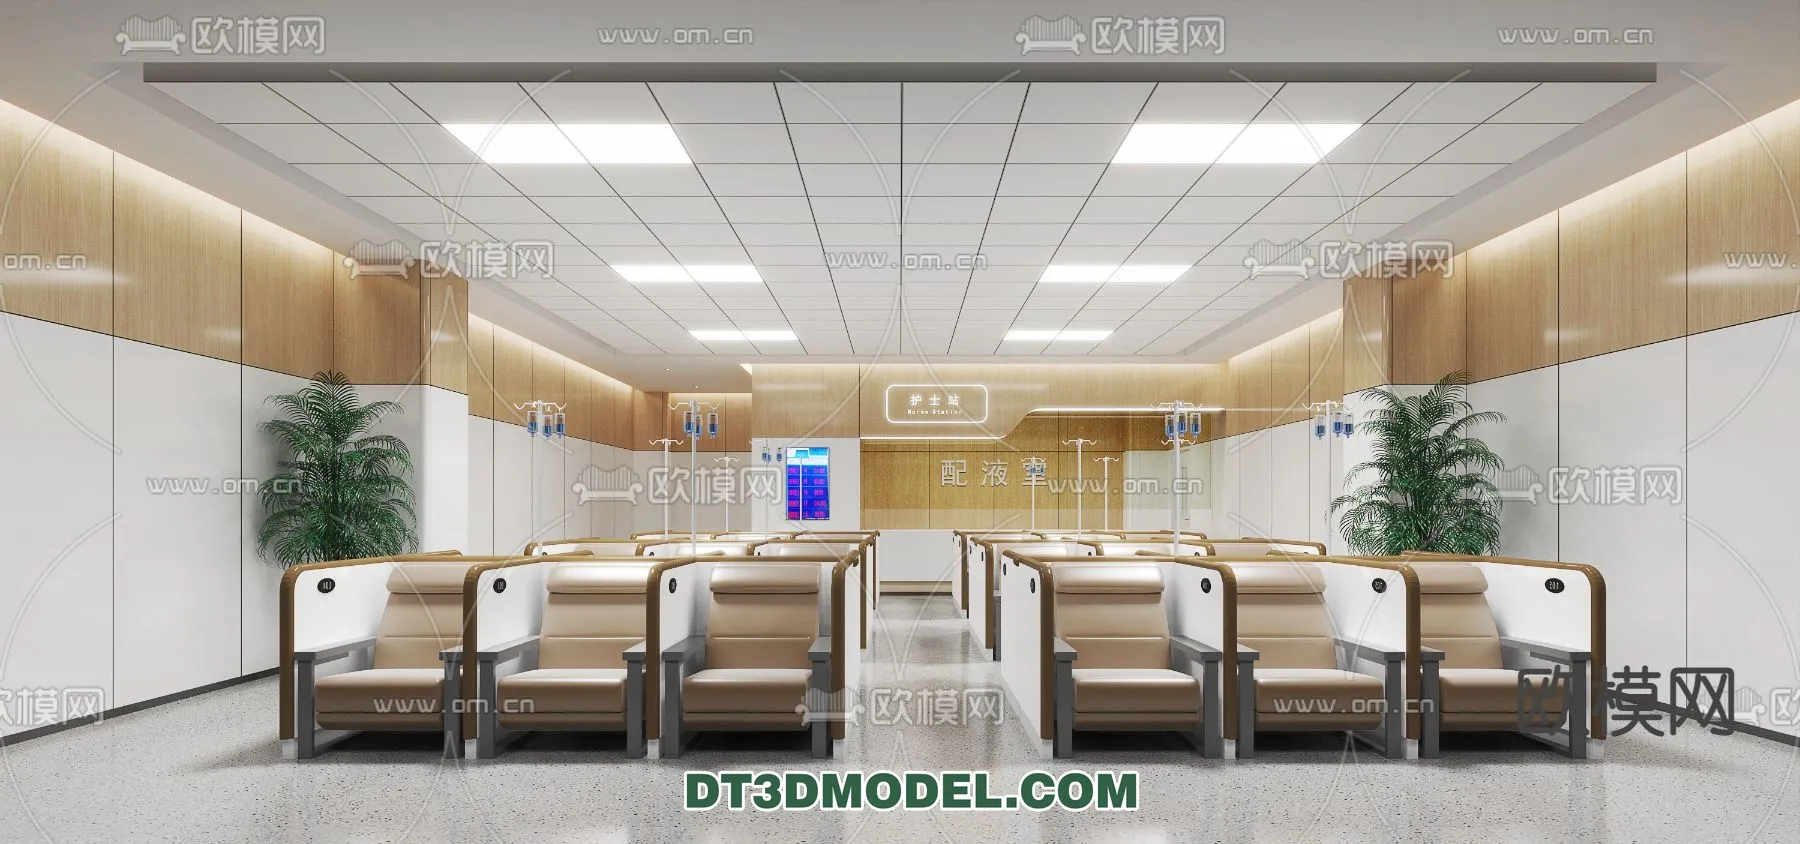 HOSPITAL 3D SCENES – MODERN – 0120